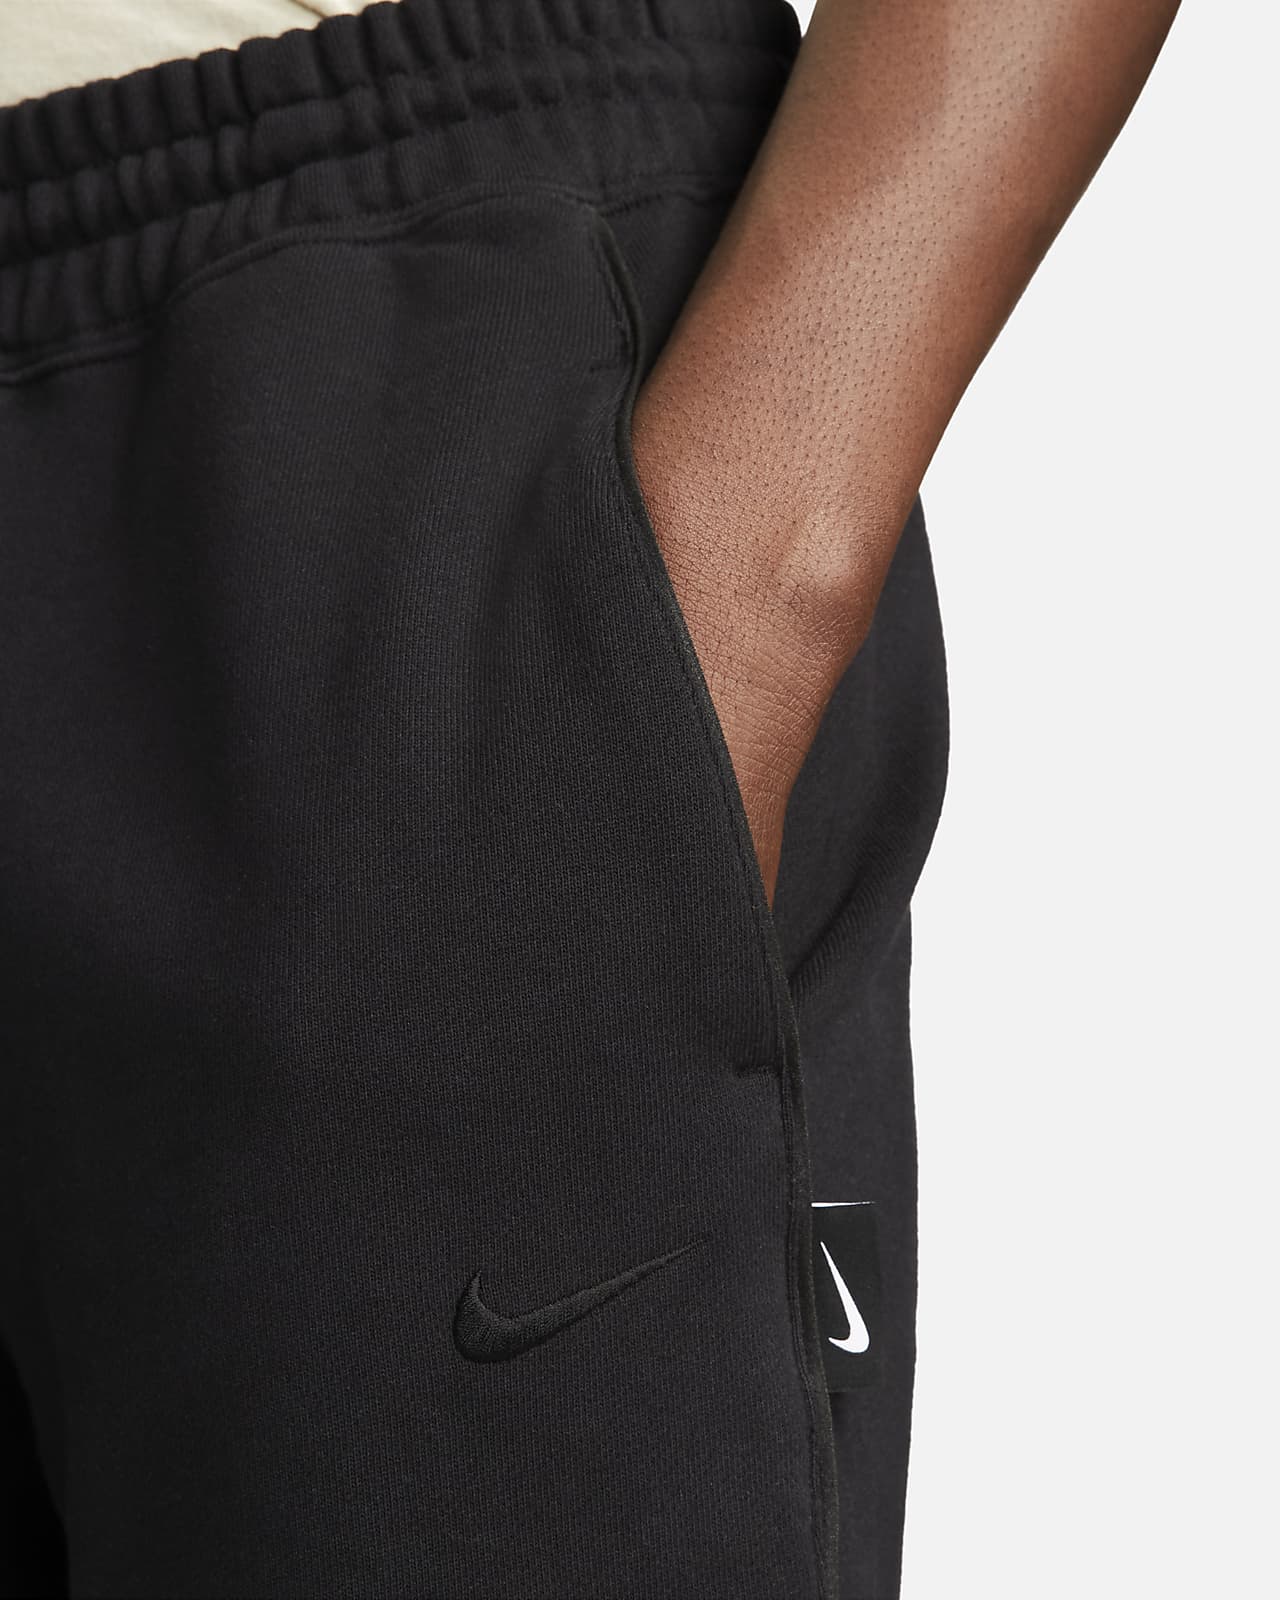 Nike Sportswear Swoosh Pant  Αθλητικά Ρούχα, Παπούτσια & Αξεσουάρ